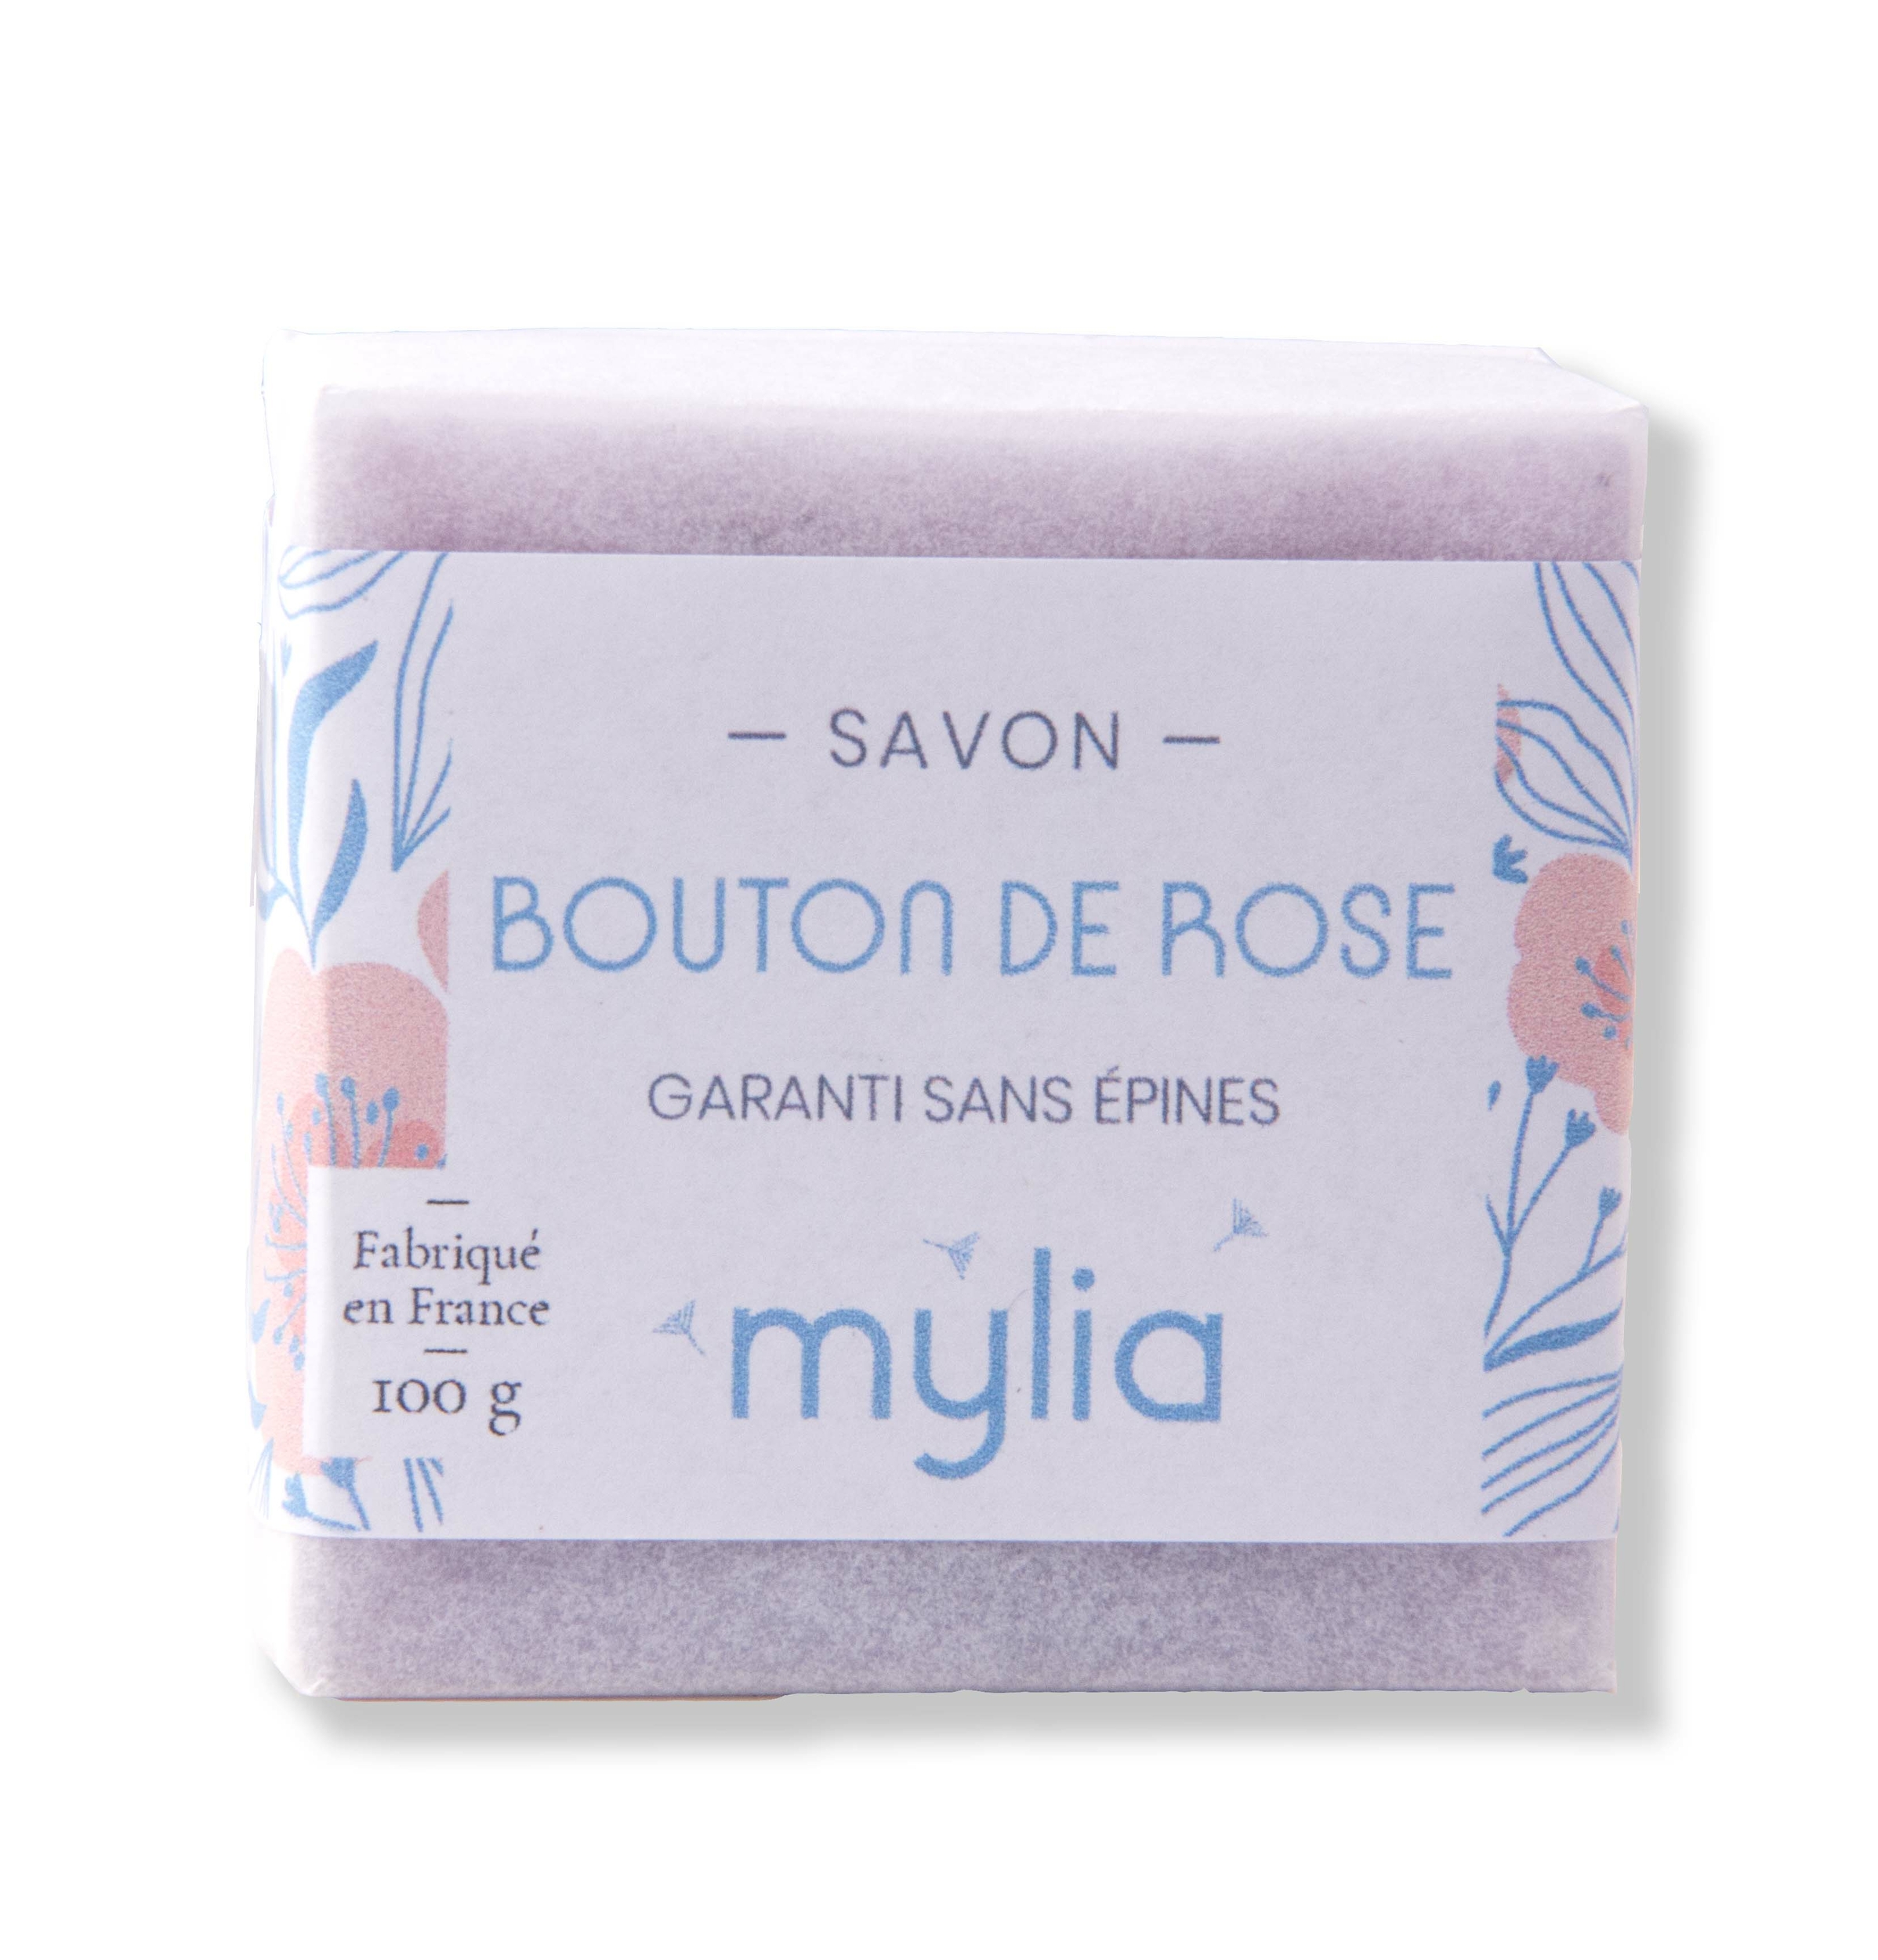 Savon mylia Bouton de rose